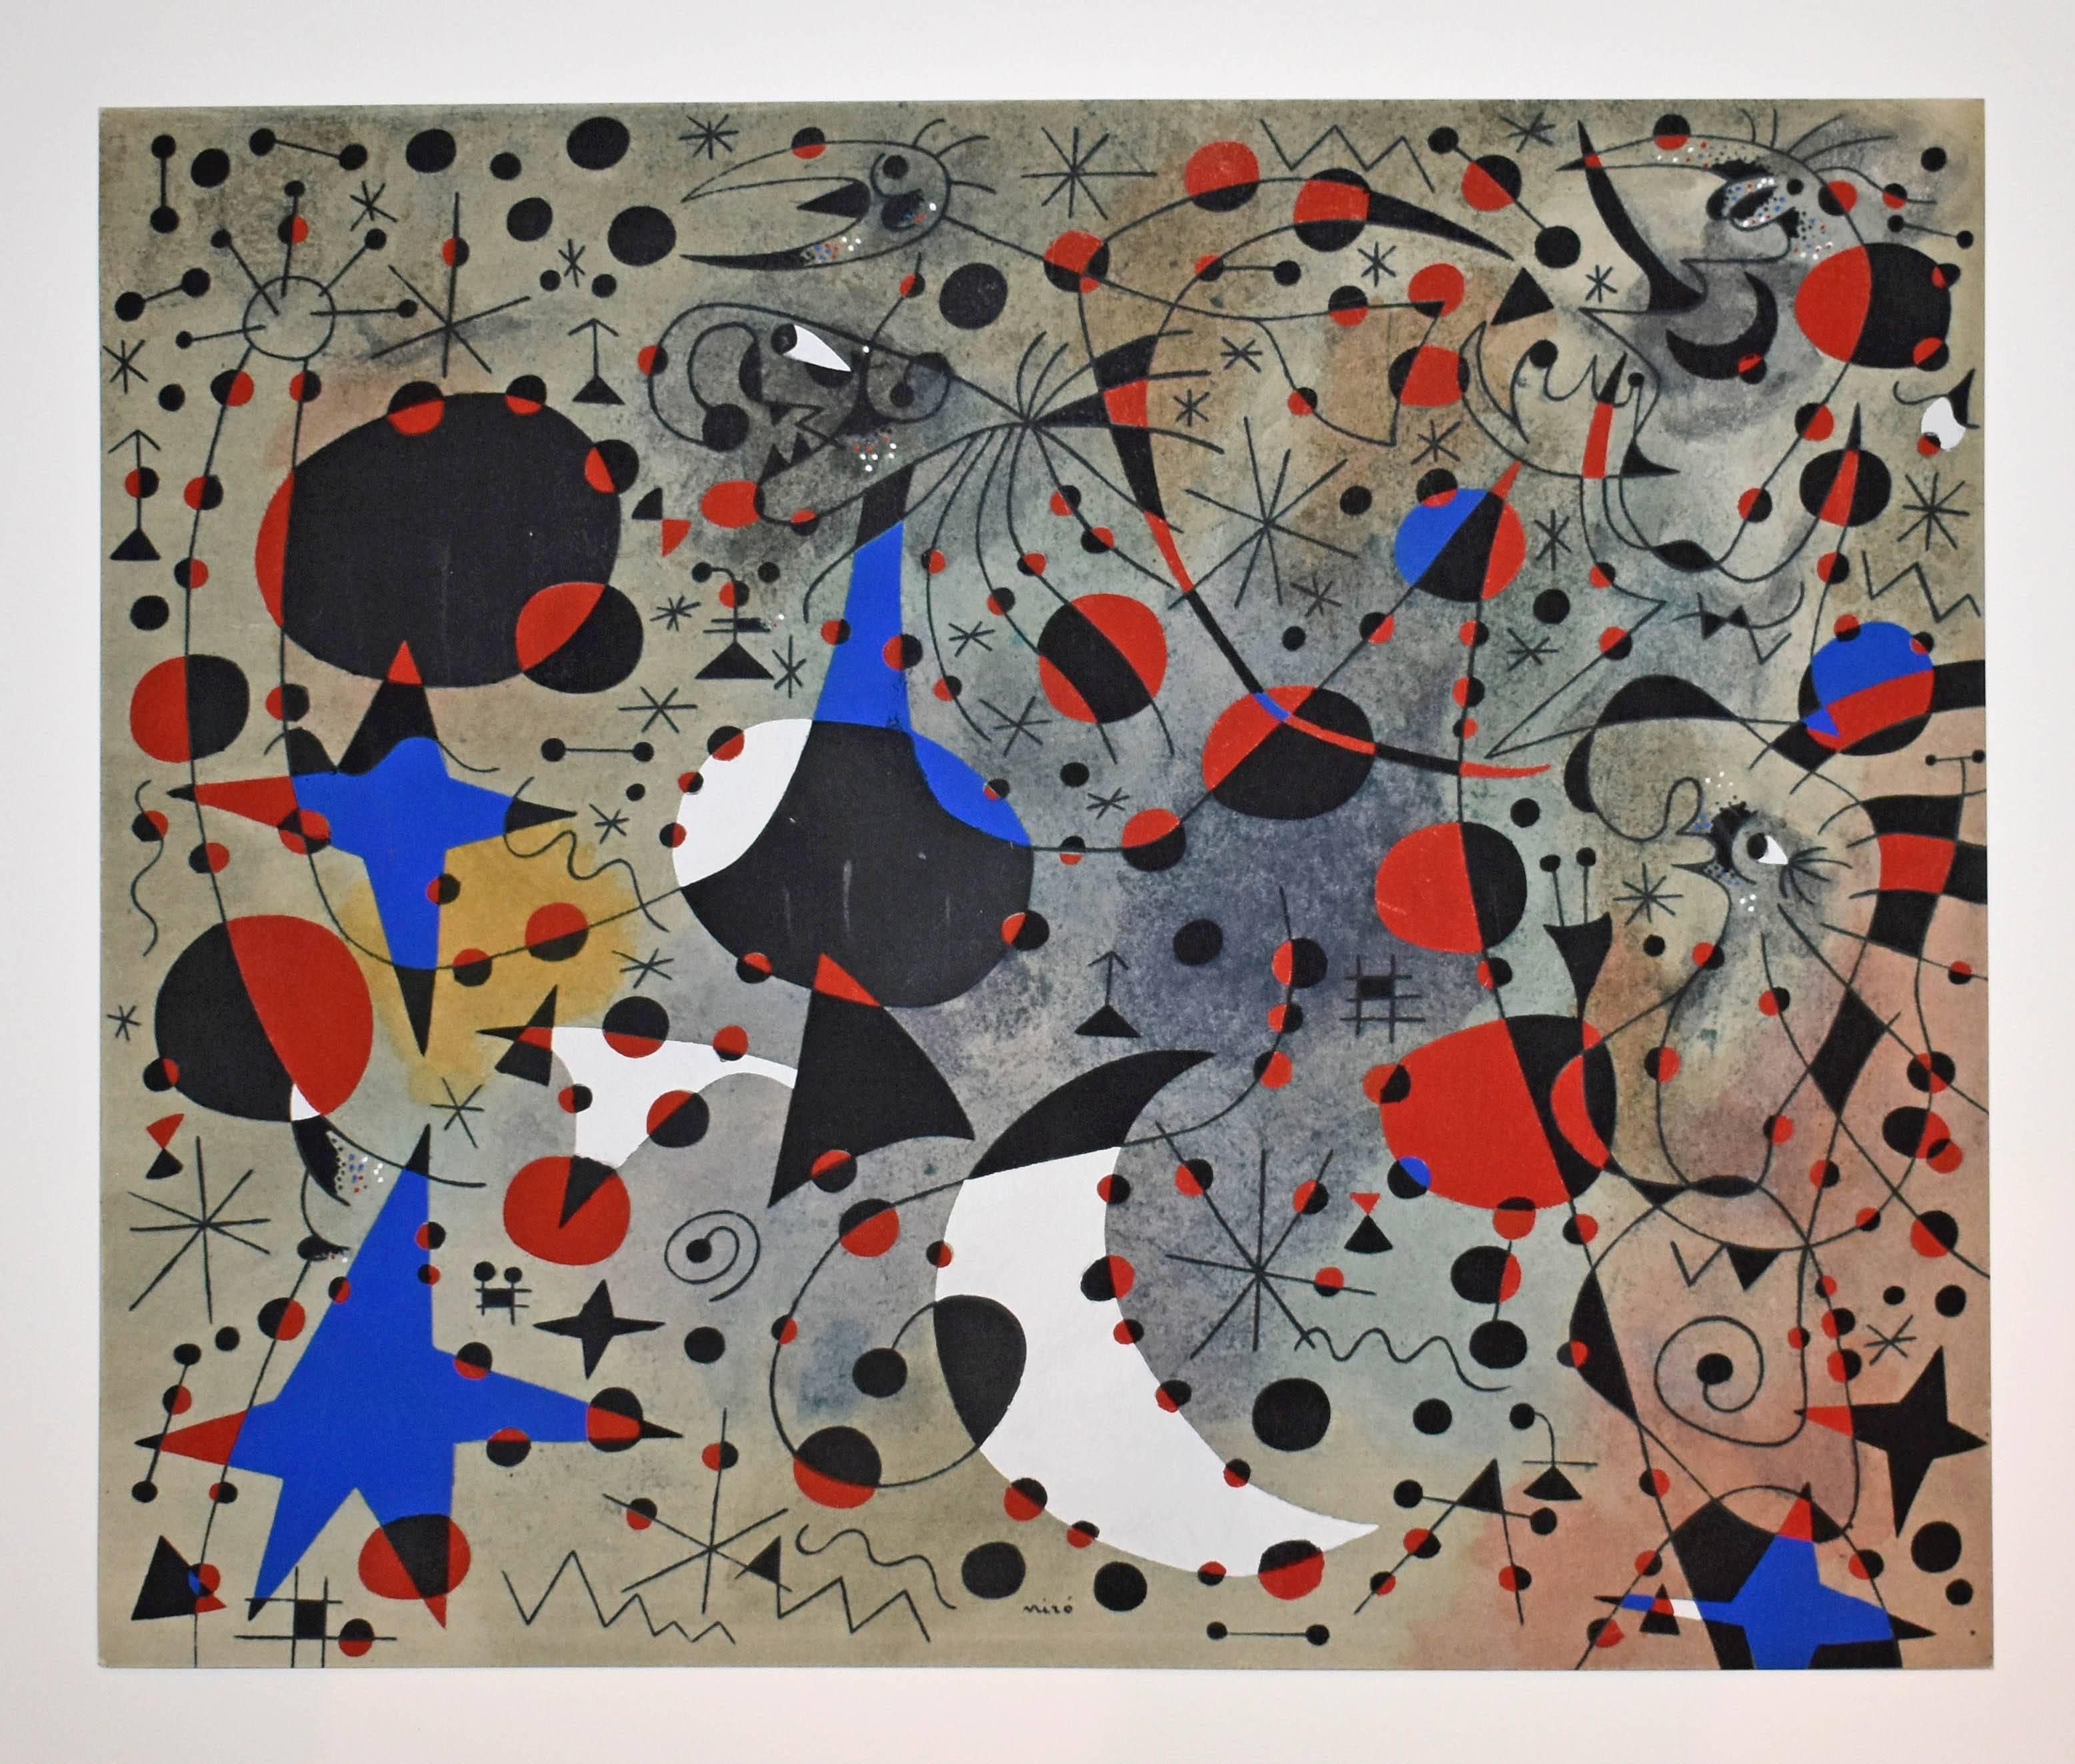 Le chant du rossignol a minuit et la pluie matinale, from Constellations - Print by (after) Joan Miró